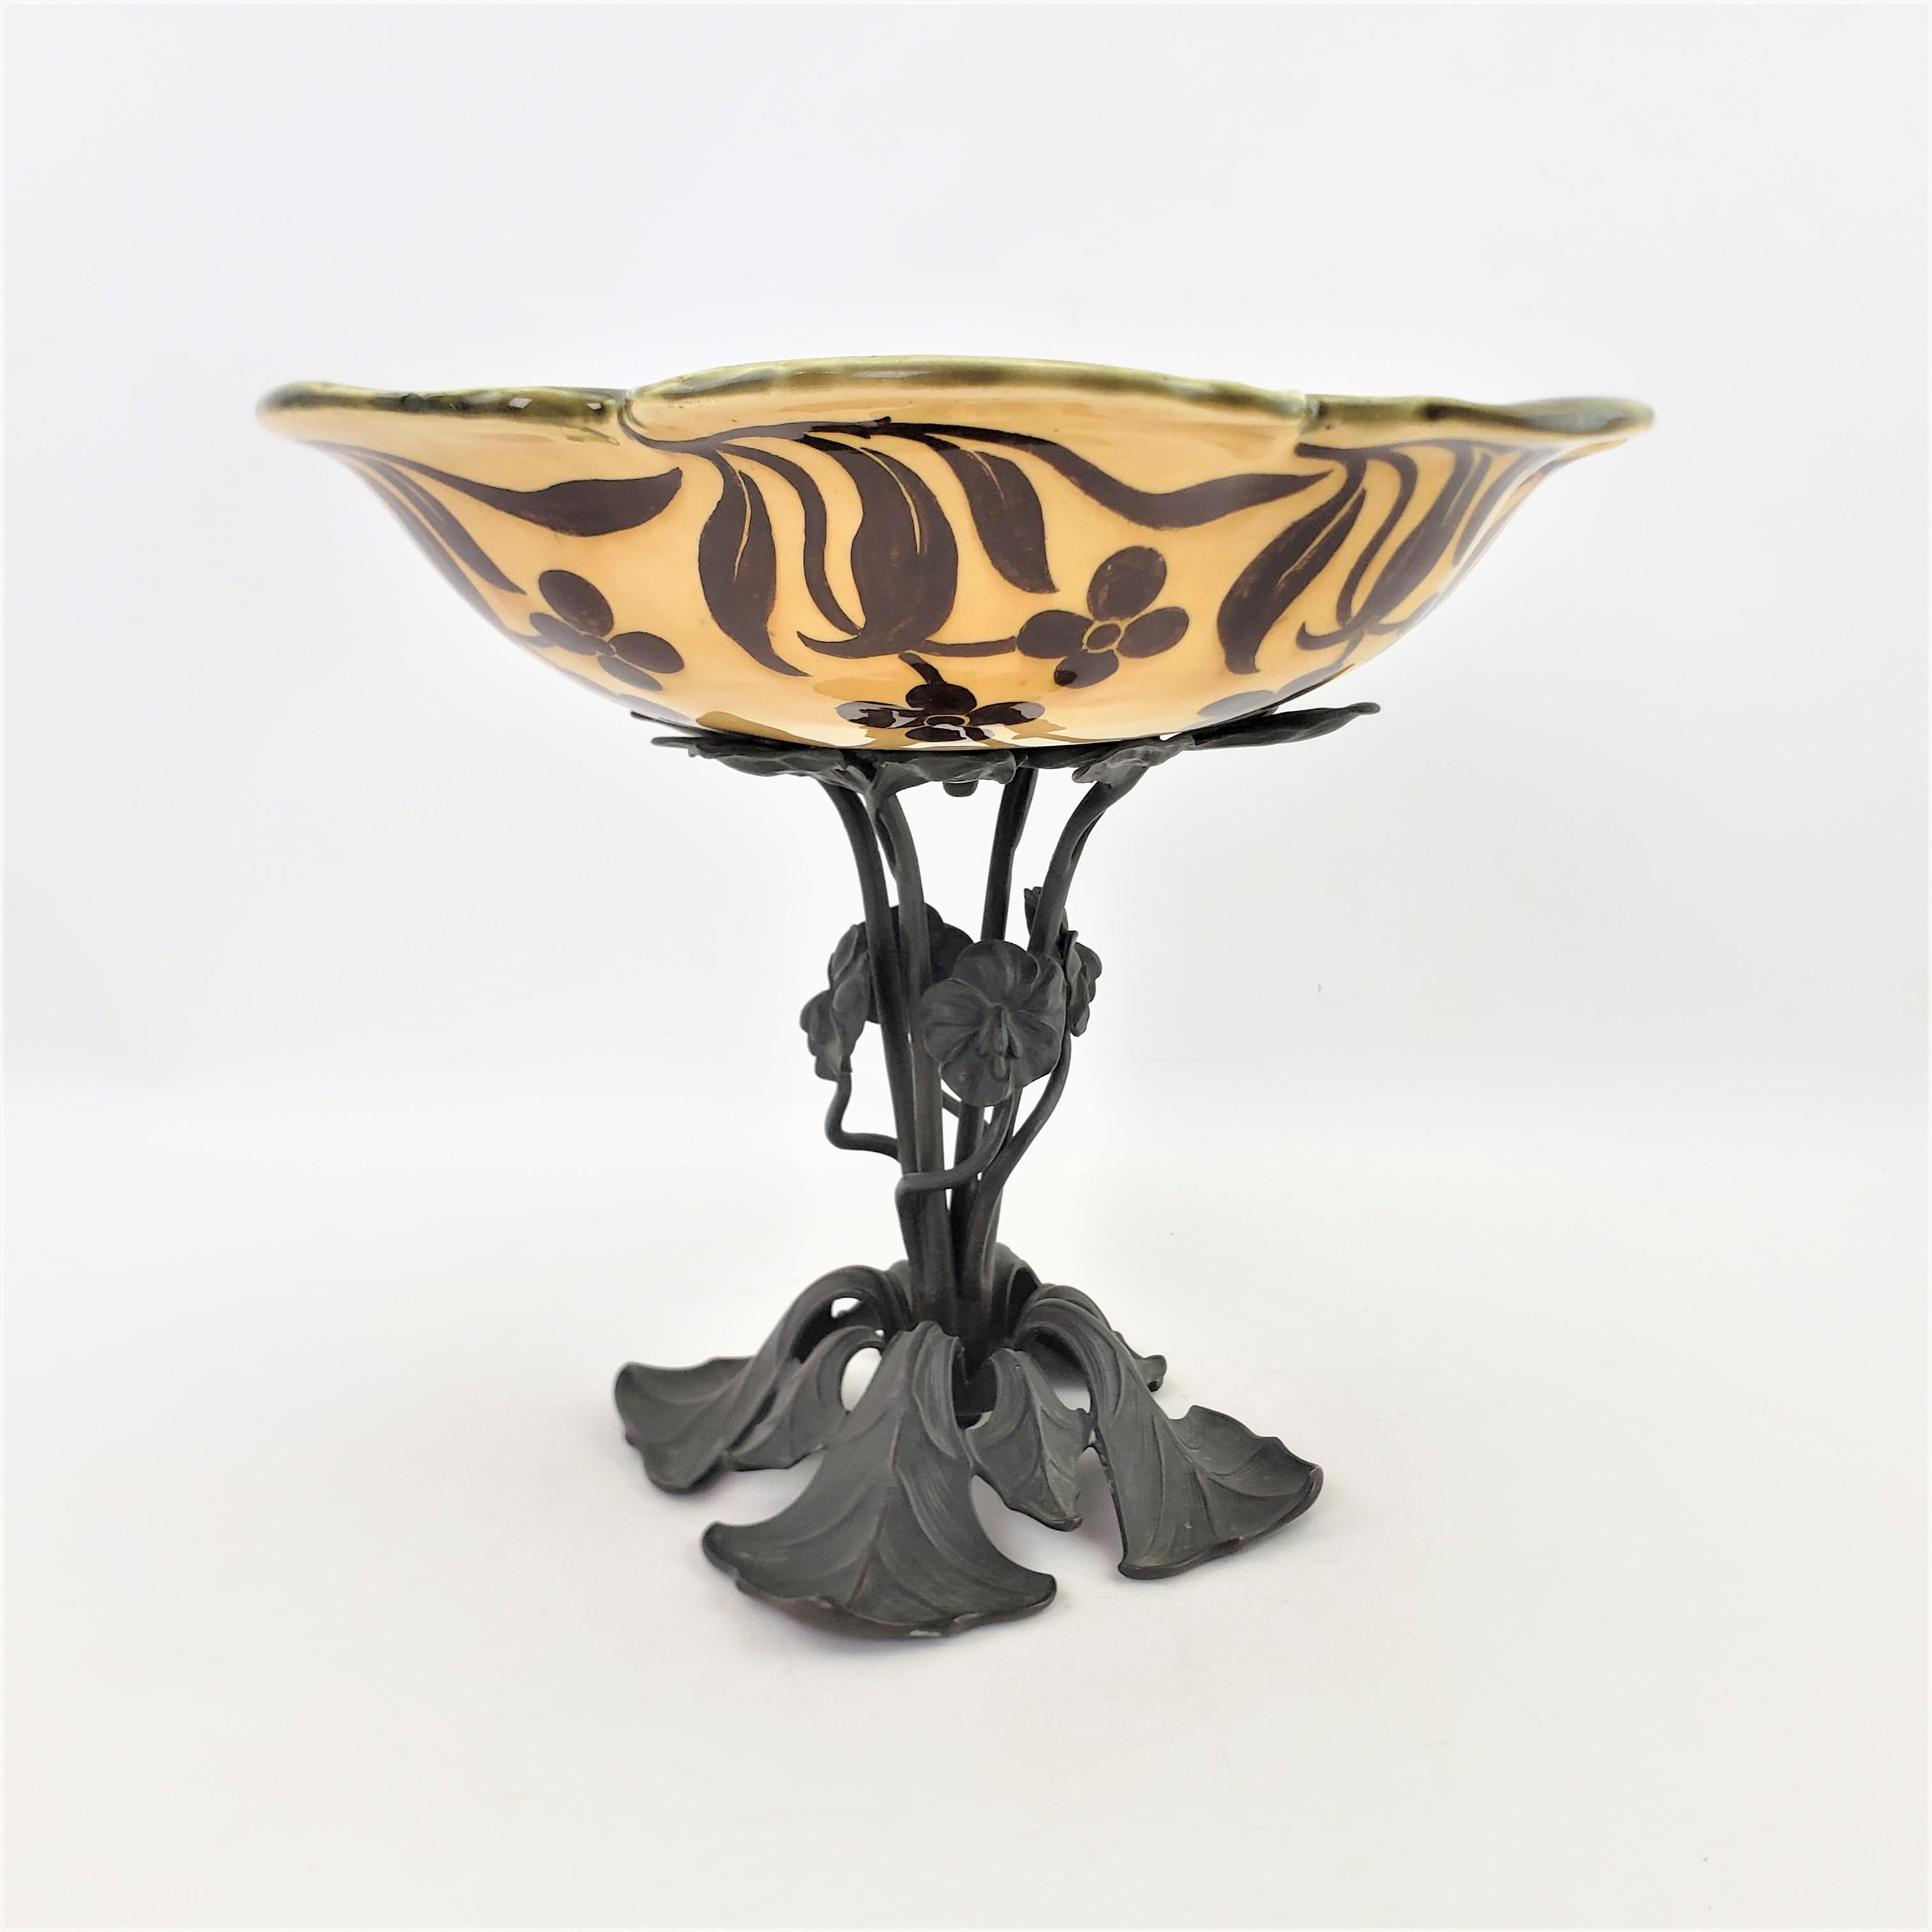 Antique Art Nouveau Cast Bronze & Ceramic Pedestal Bowl, Tazza or Centerpiece In Good Condition For Sale In Hamilton, Ontario